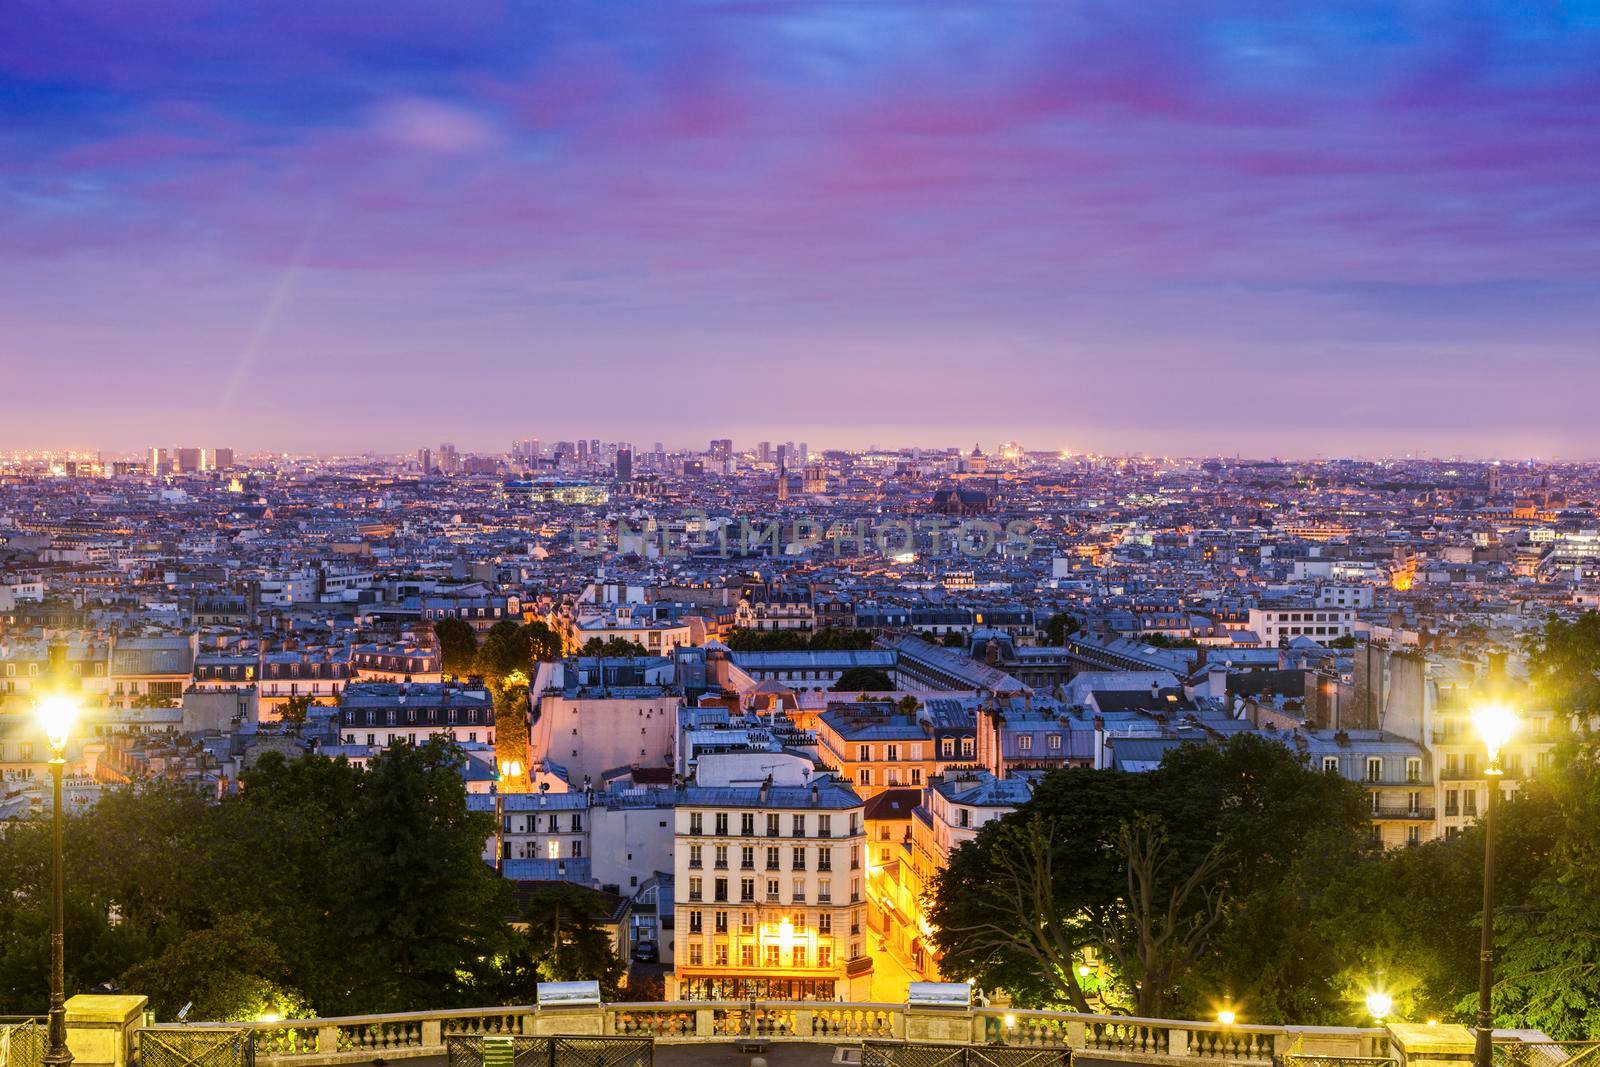 Paris panorama seen from Montmartre at sunrise. Paris, France